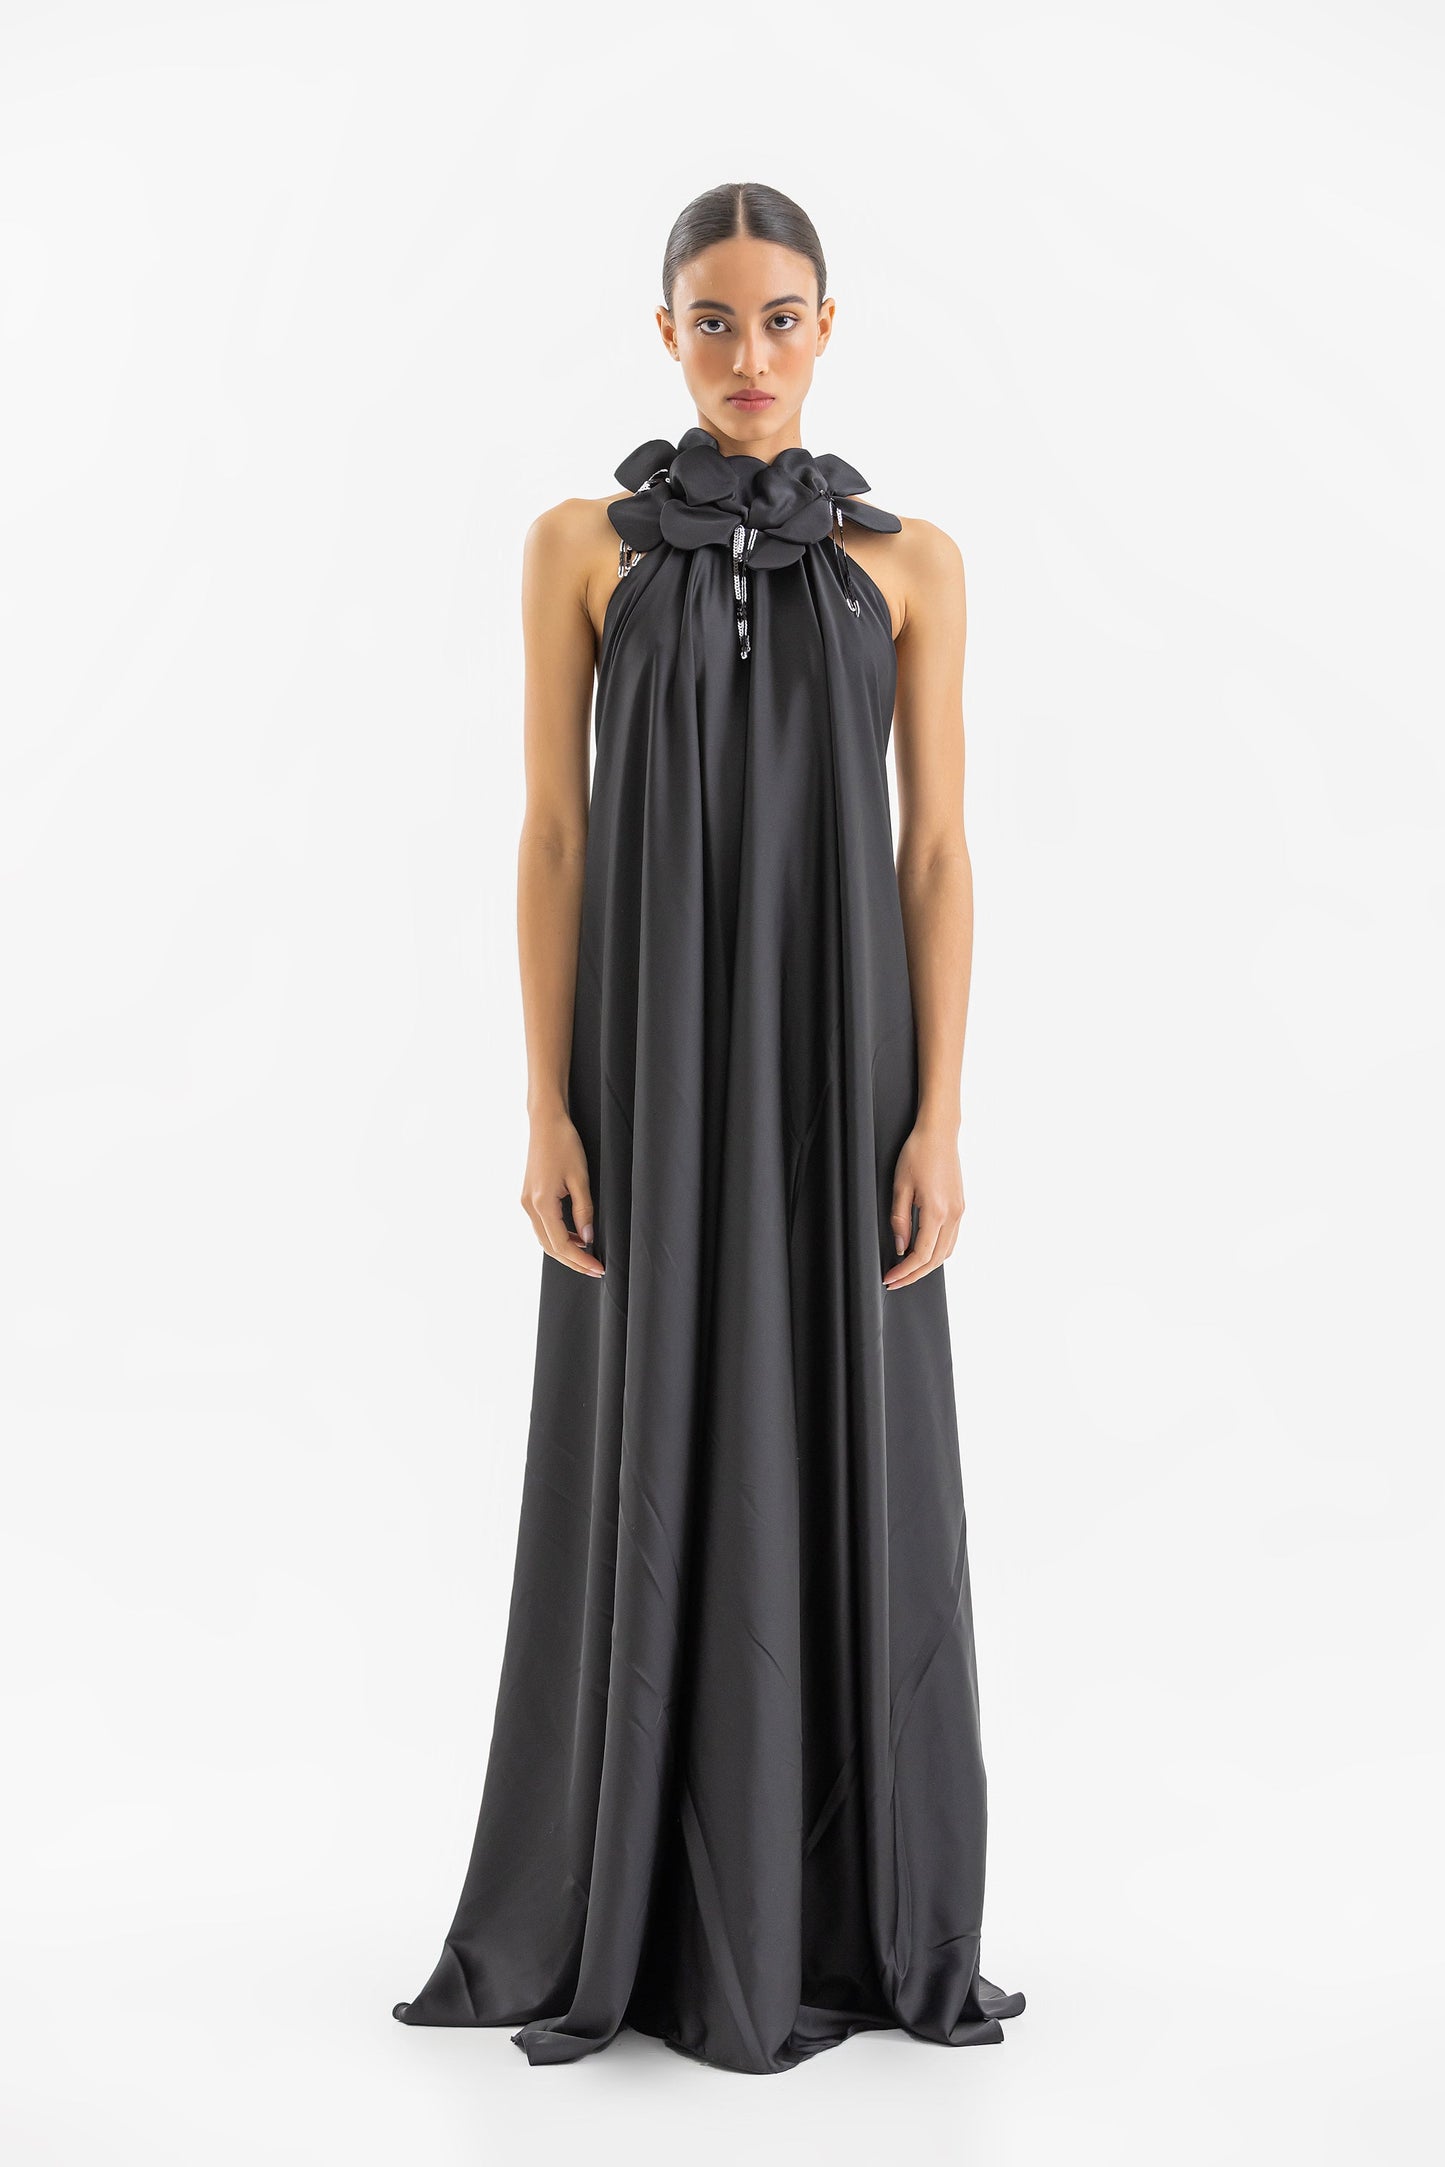 Califé Dress - Black